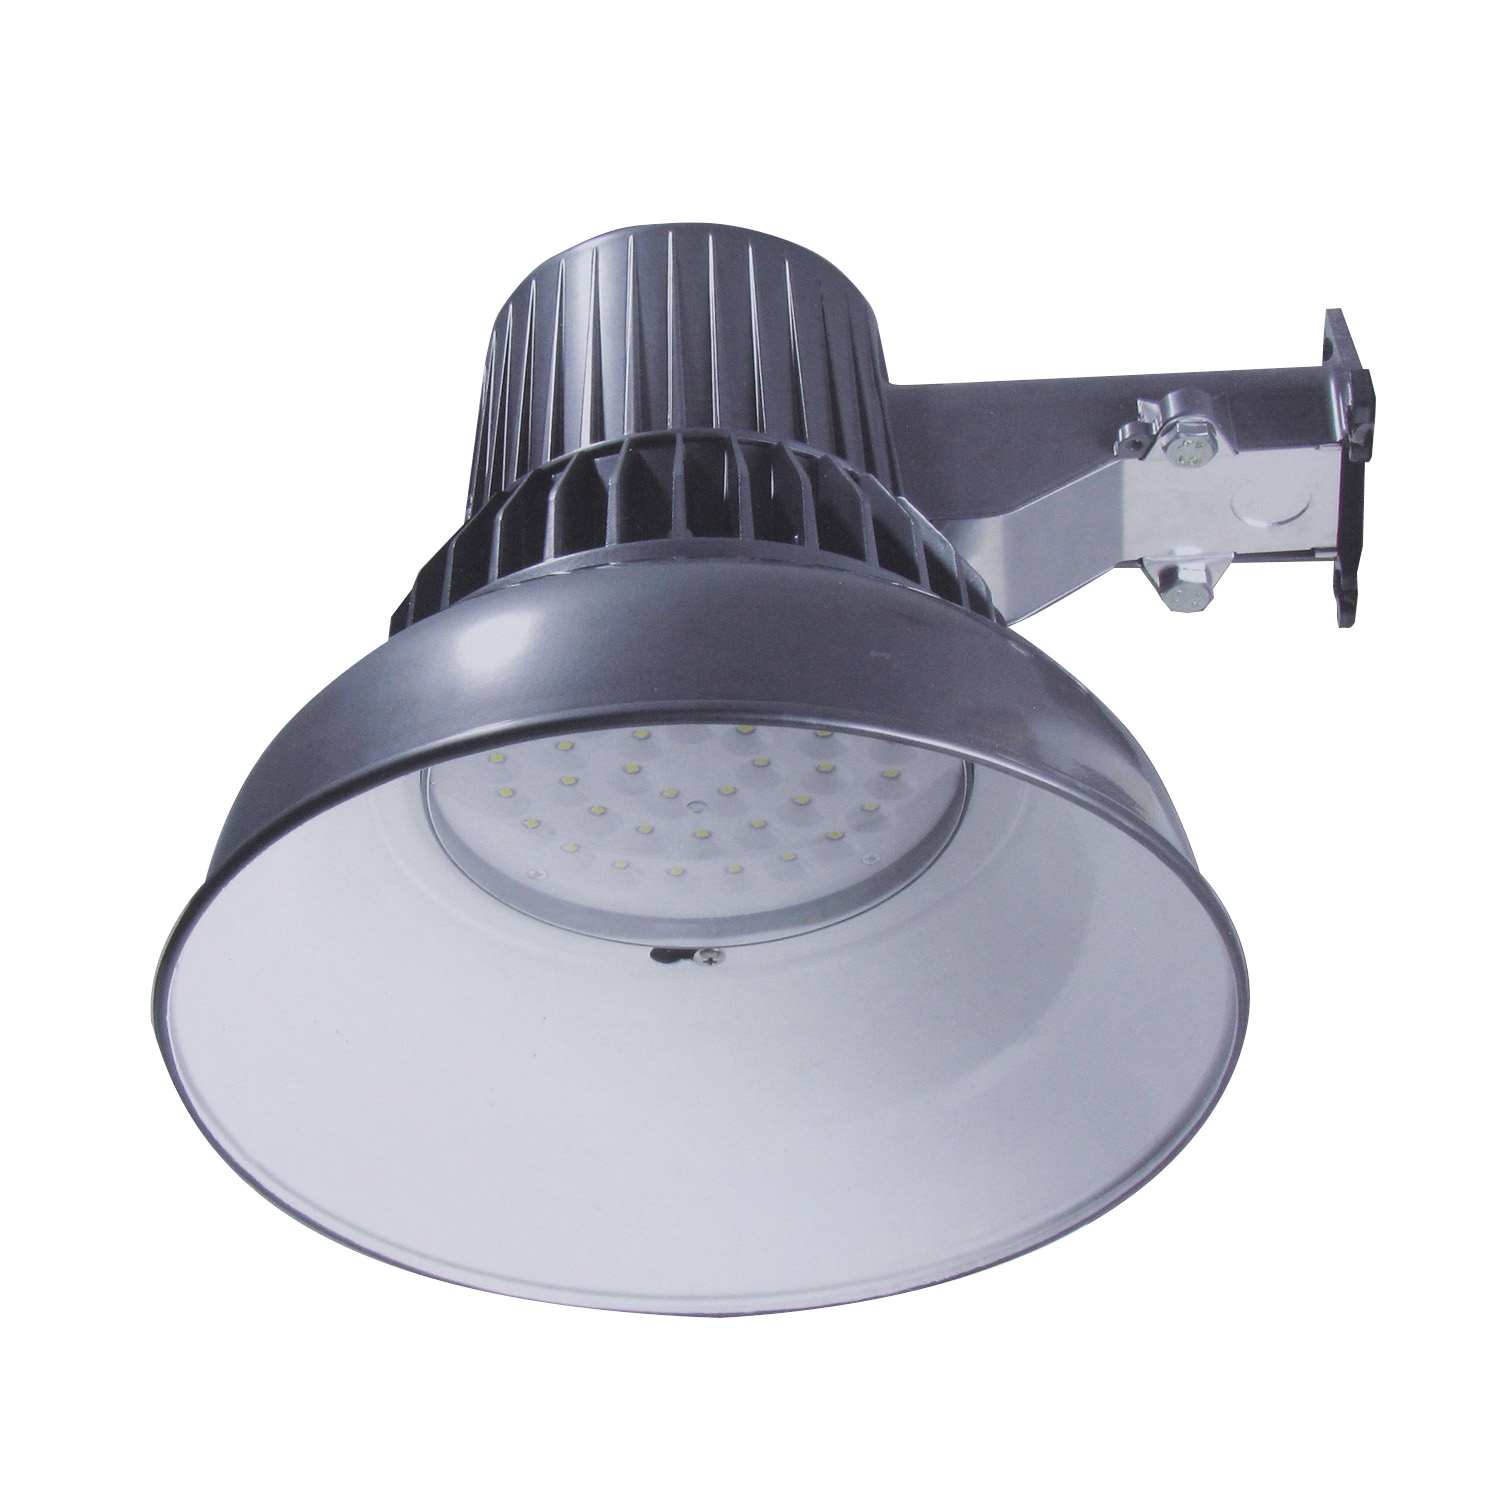 Honeywell LED Security Light In Diecast Aluminum Construction, 3500 Lumens, MA0251-82